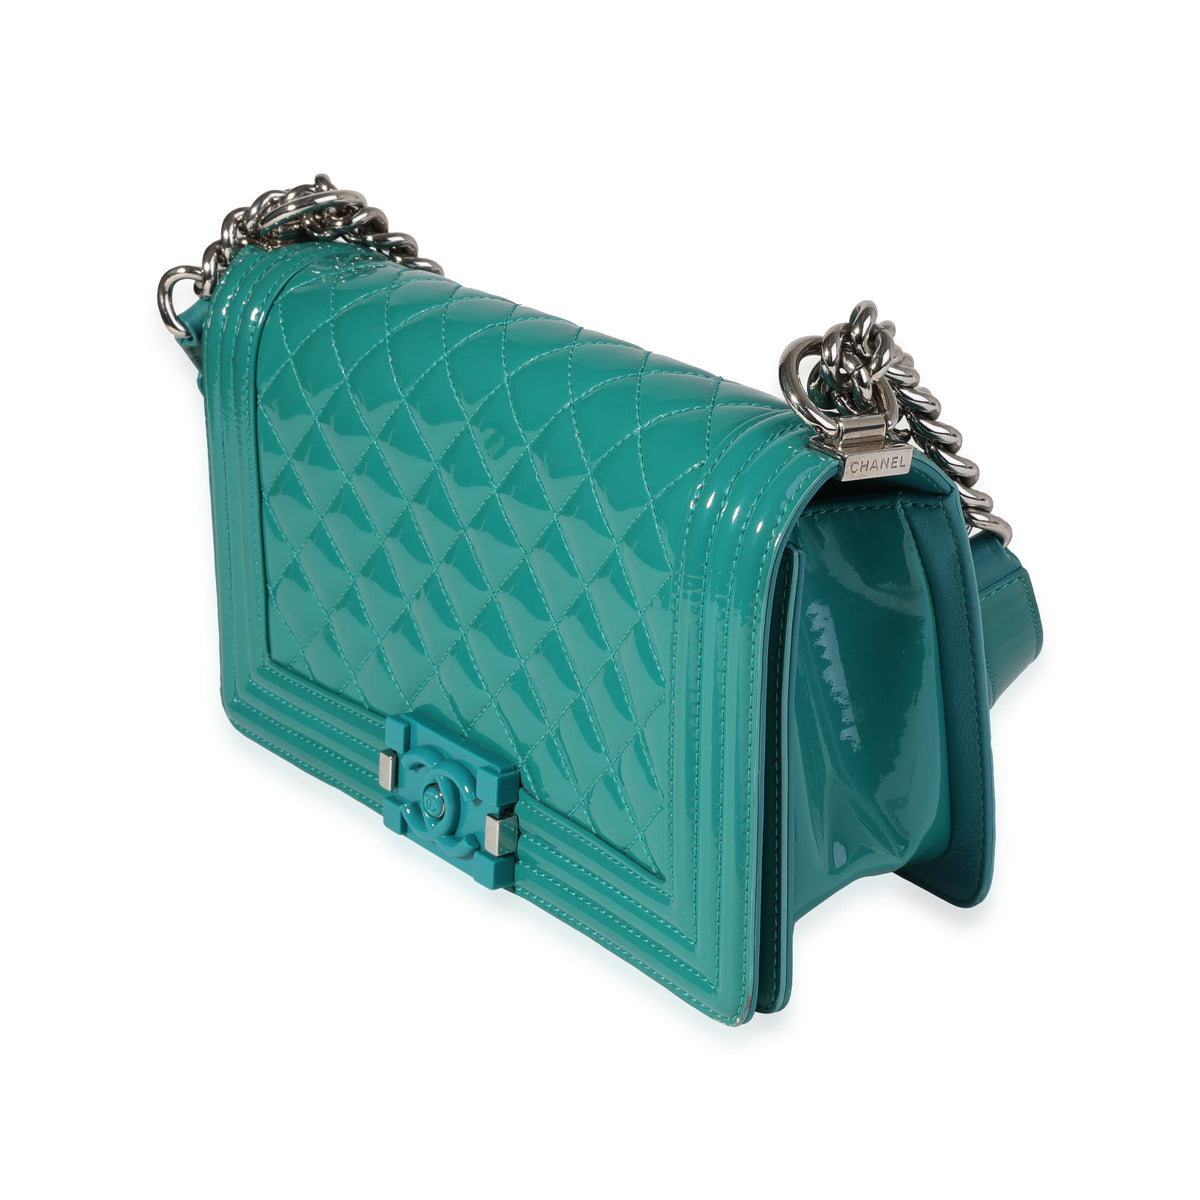 patent leather chanel handbag white